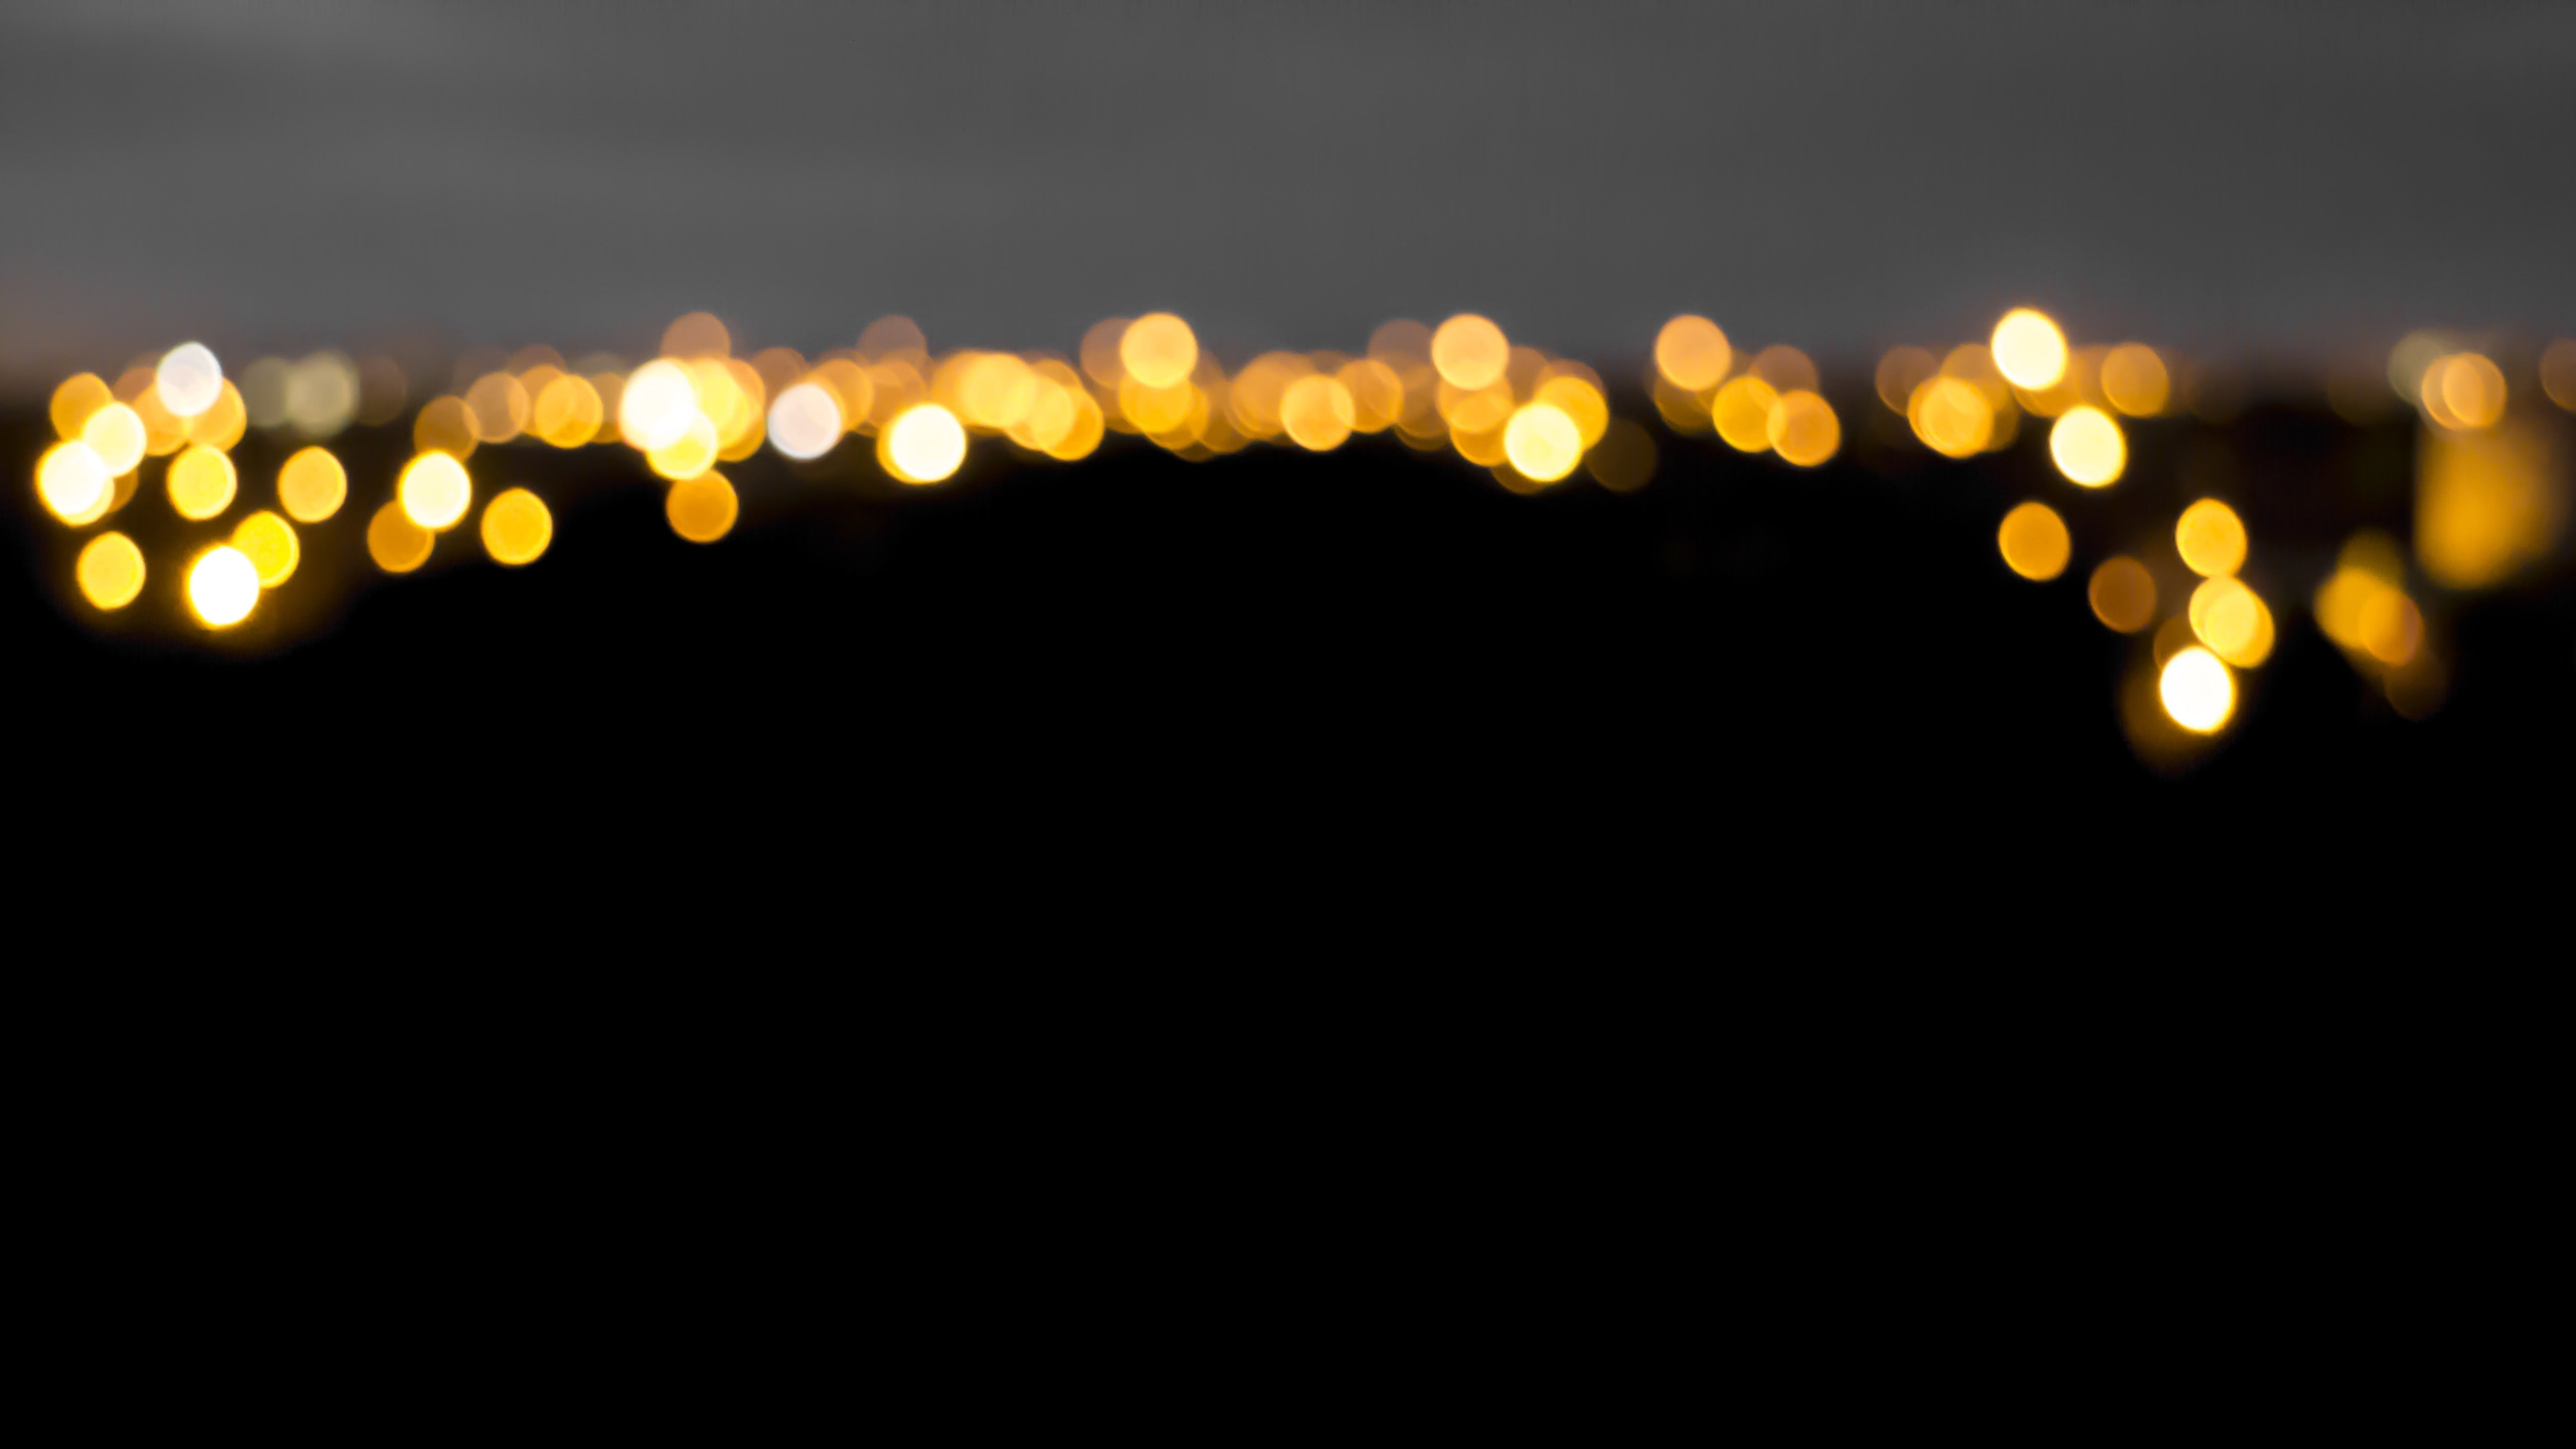 bokeh photography of yellow lights, dusk, city lights, illuminated